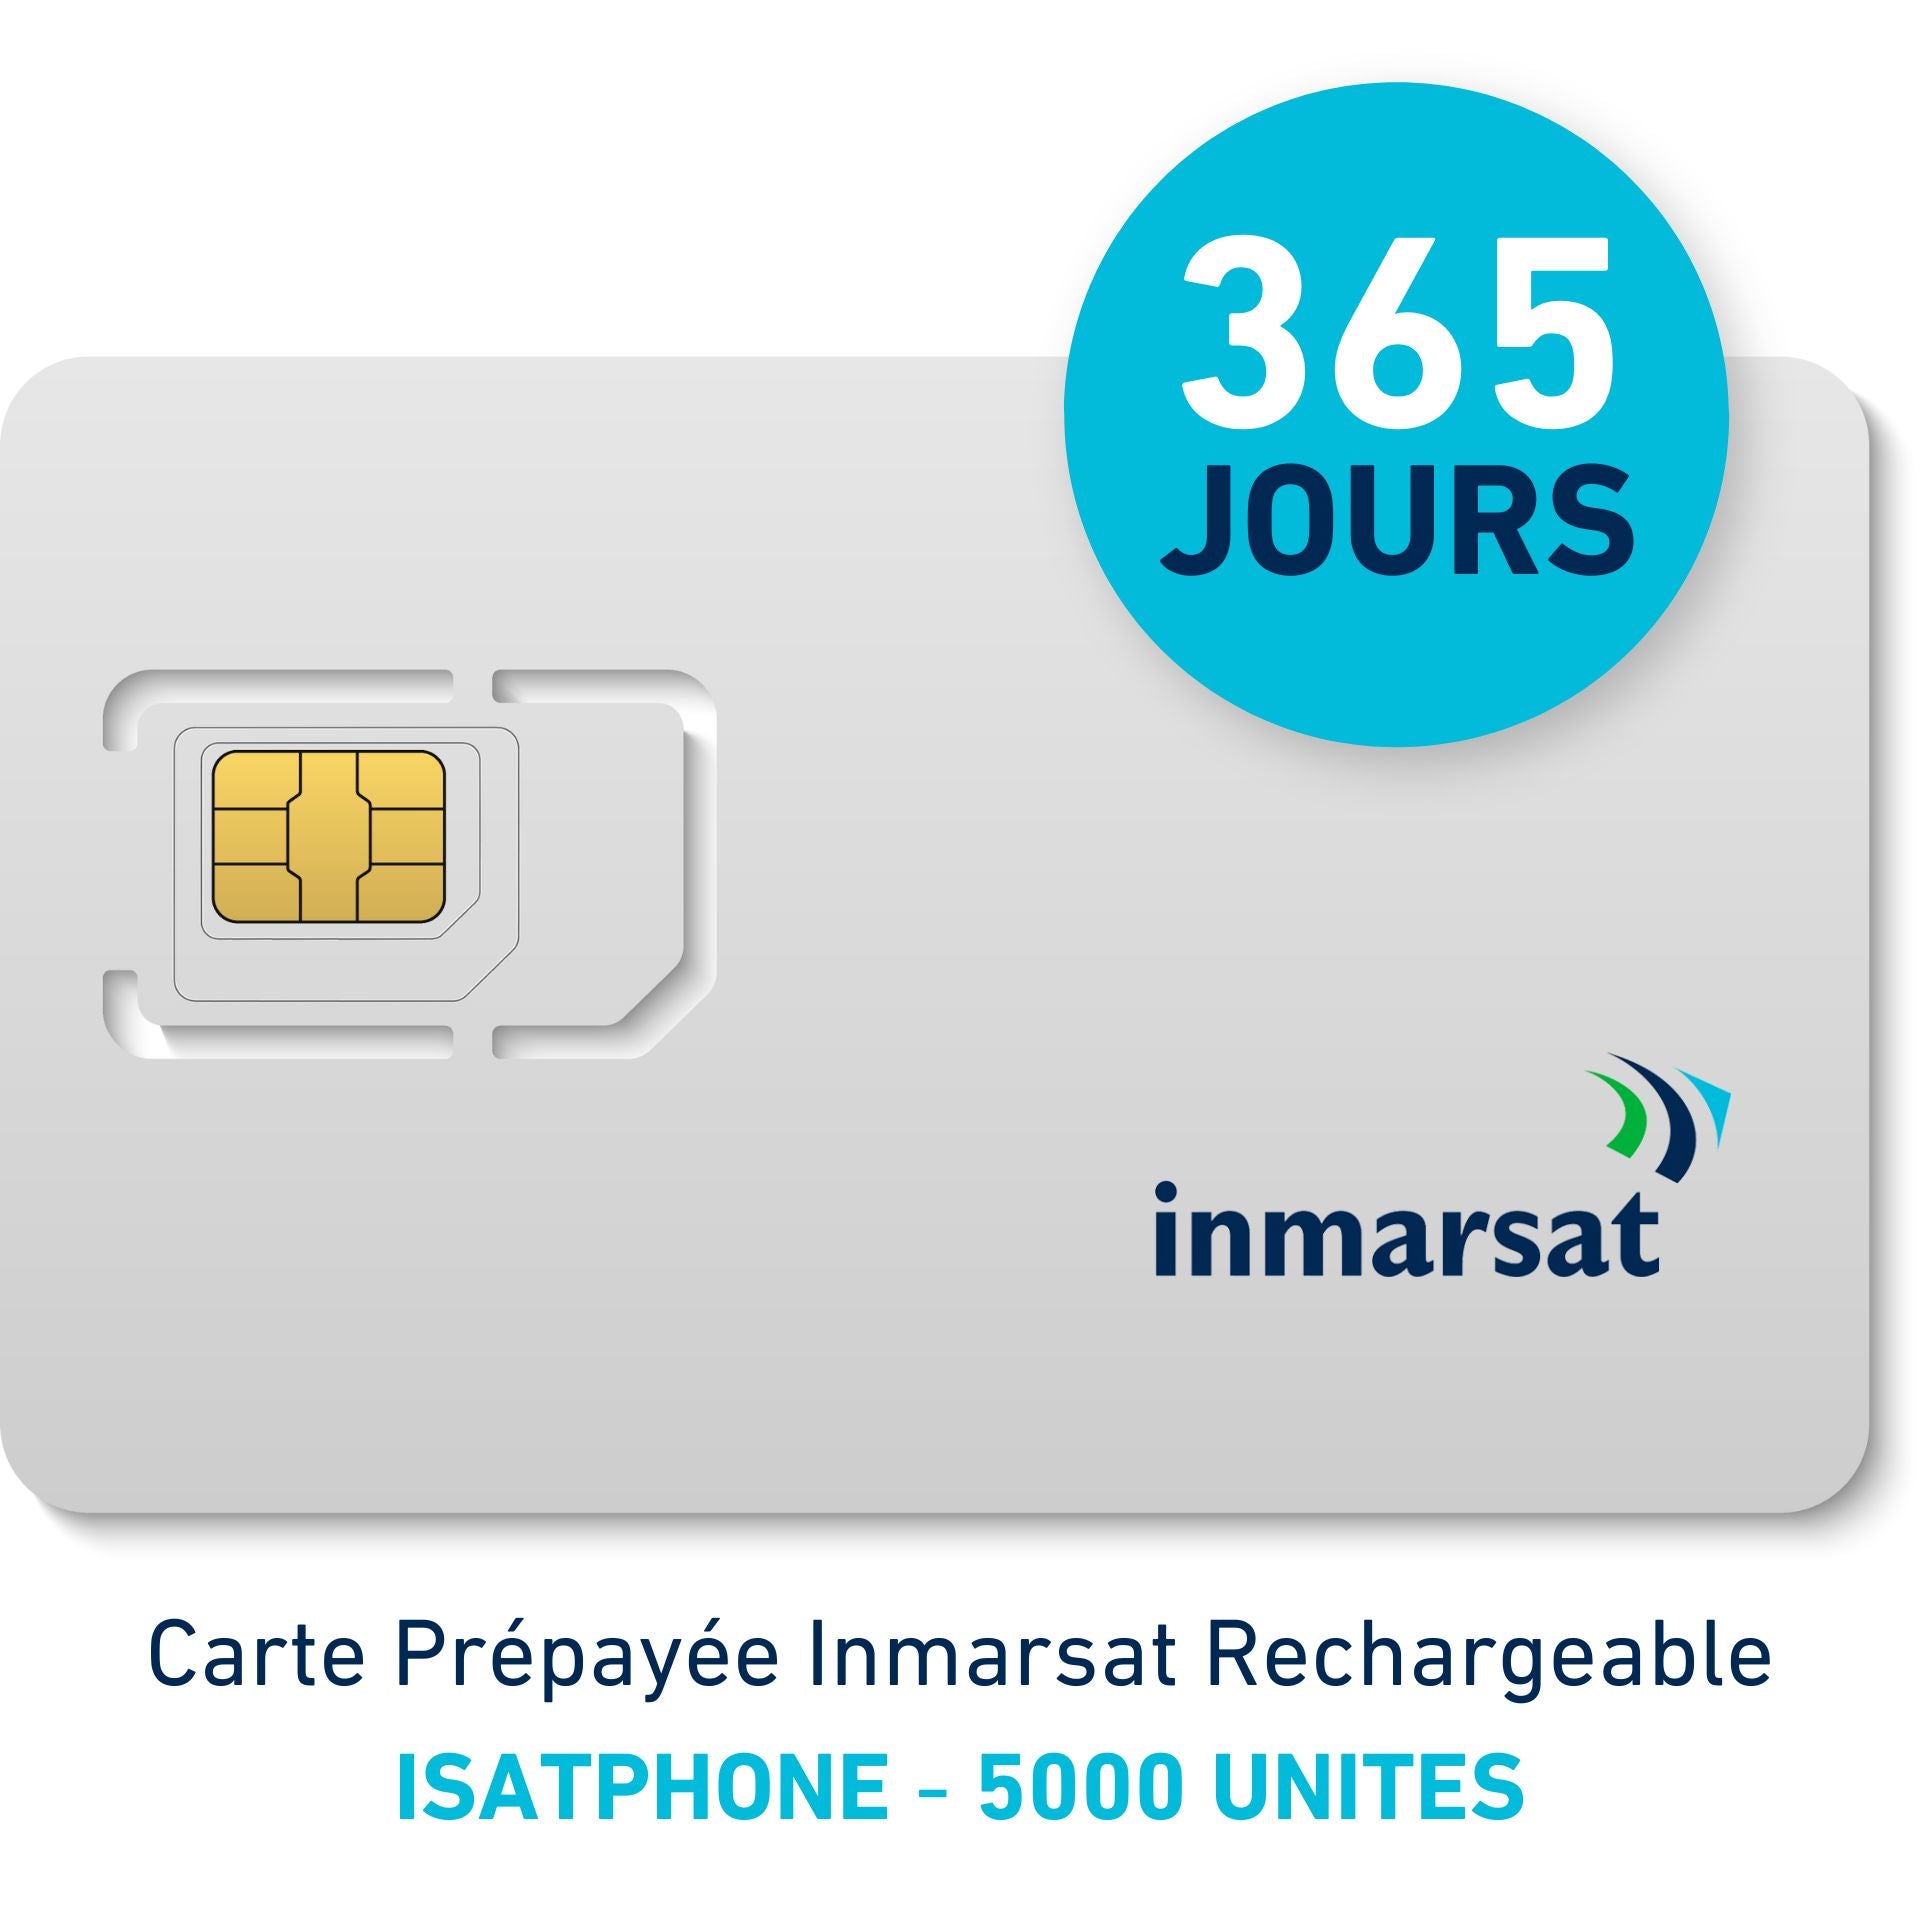 INMARSAT Rechargeable ISATPHONE Prepaid Card - 5000 UNITS - 365 DAYS